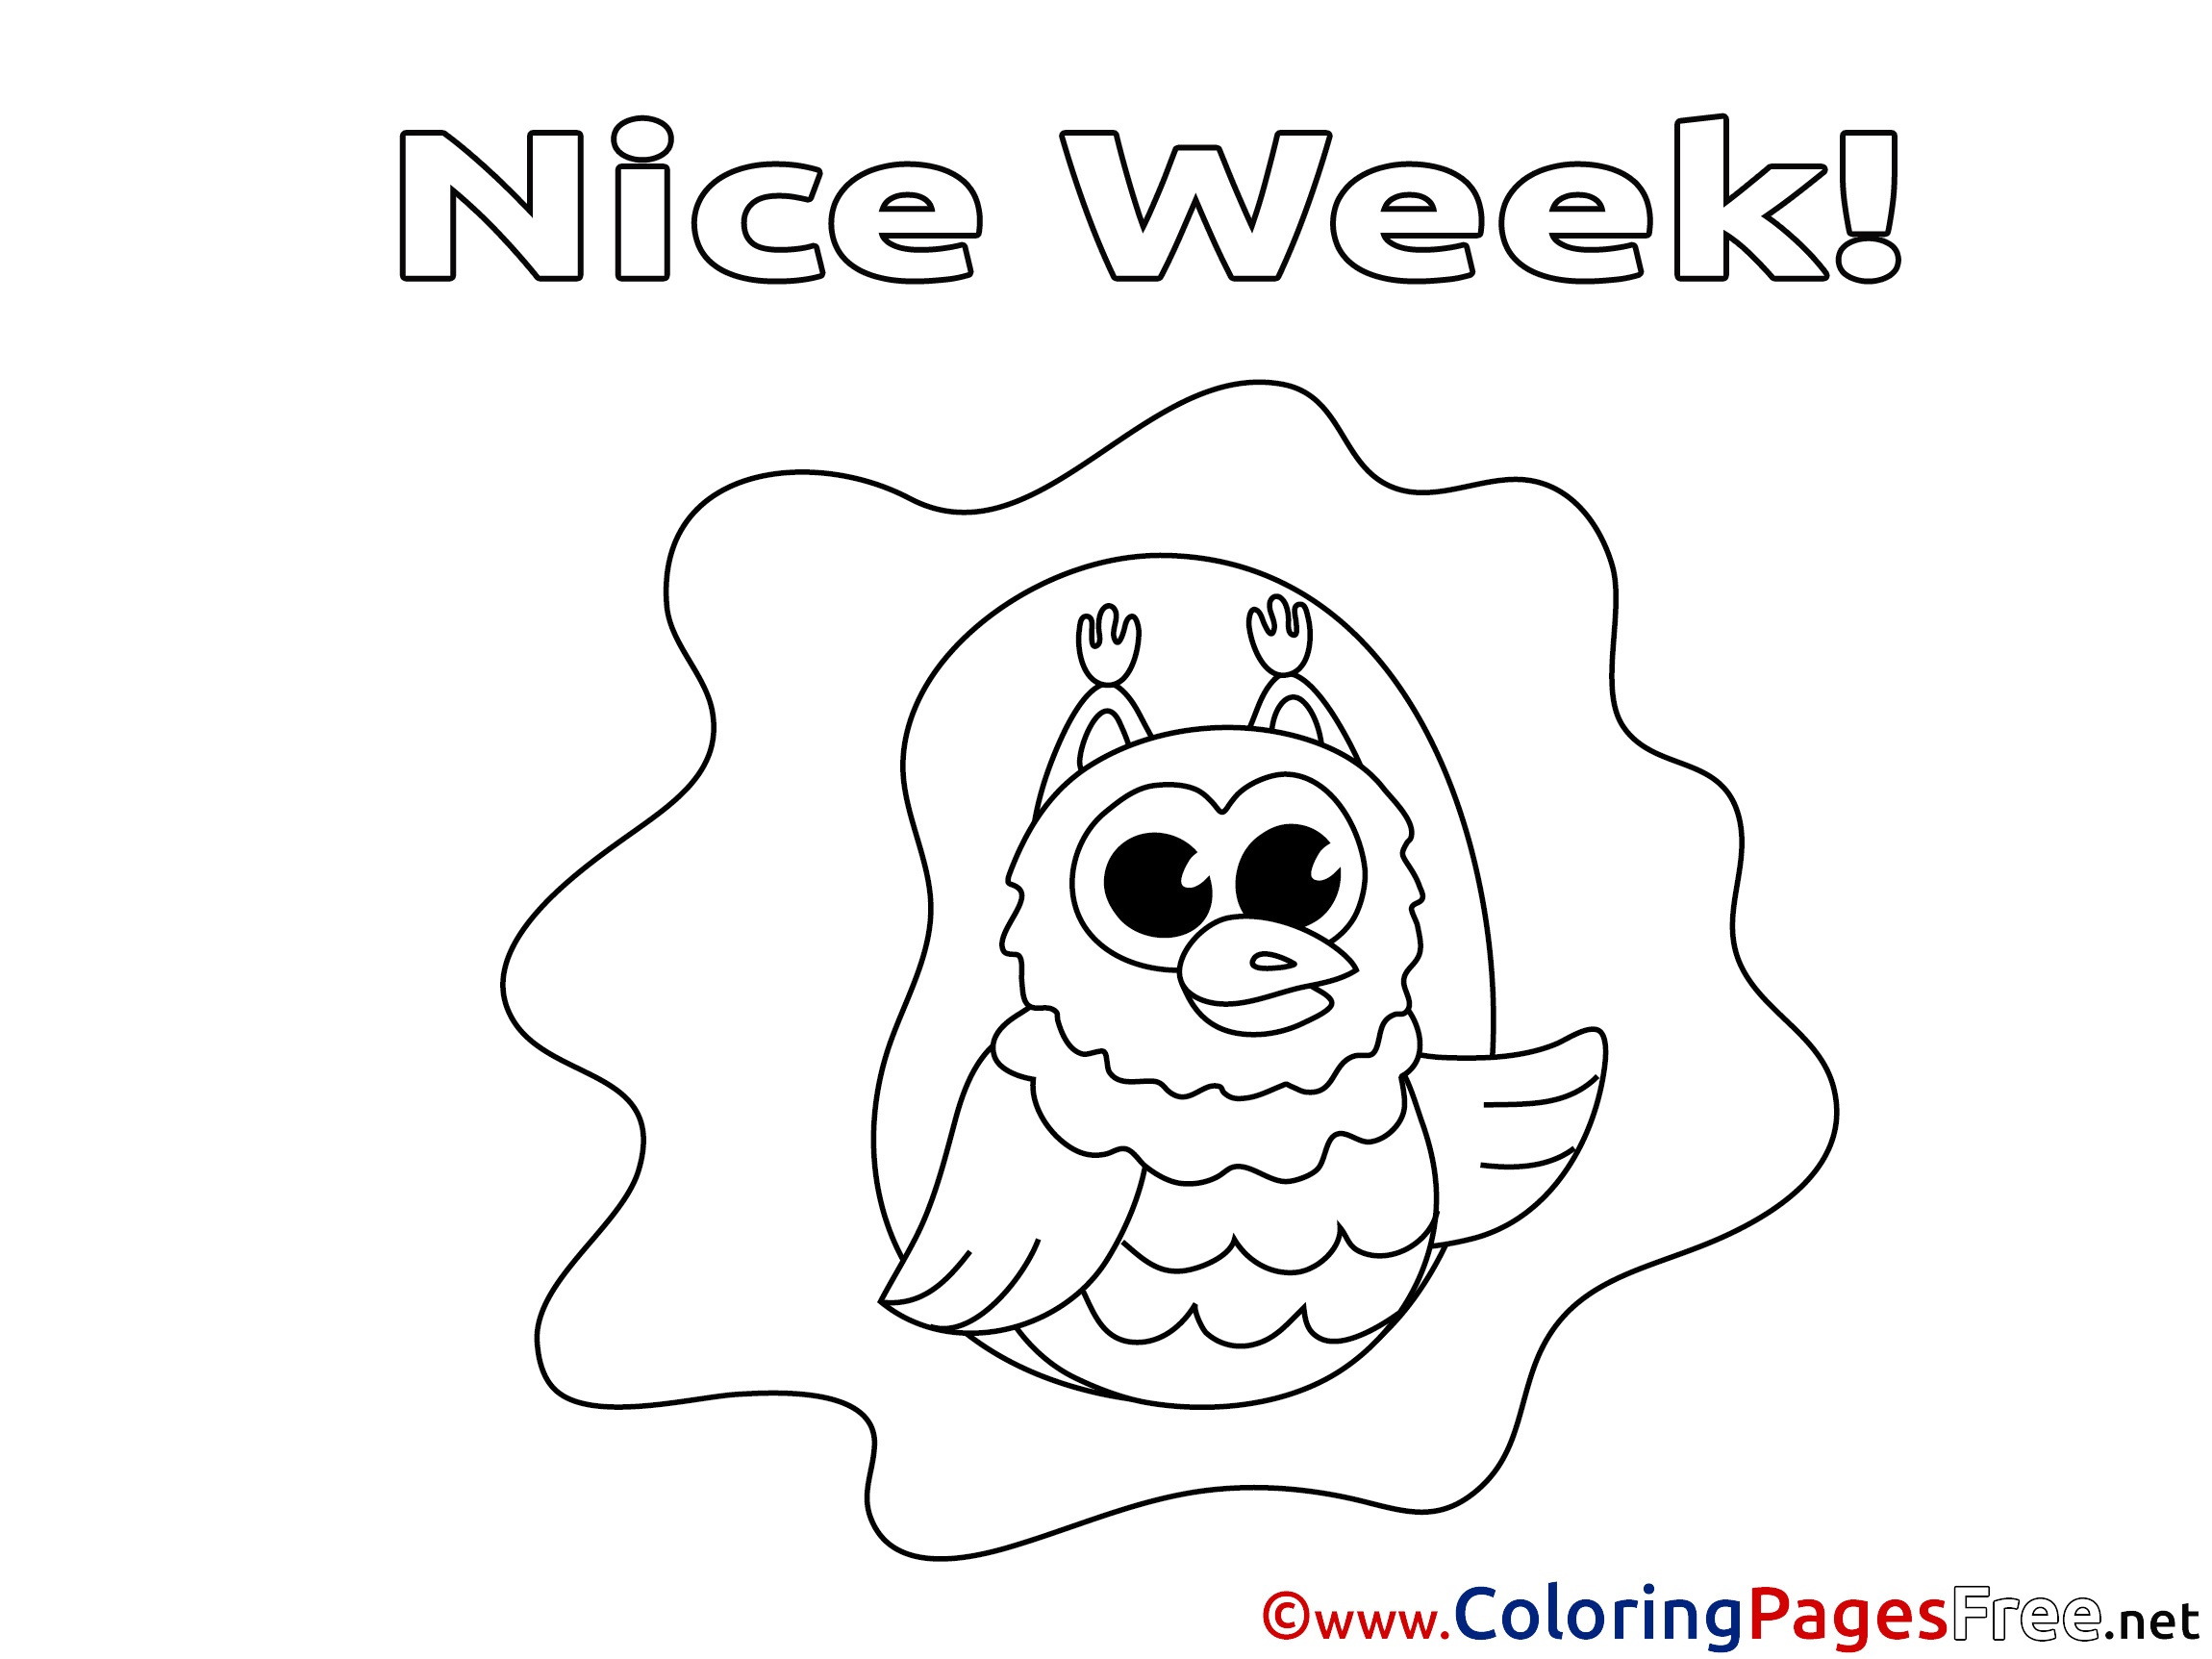 Owl Colouring Sheet download Nice Week